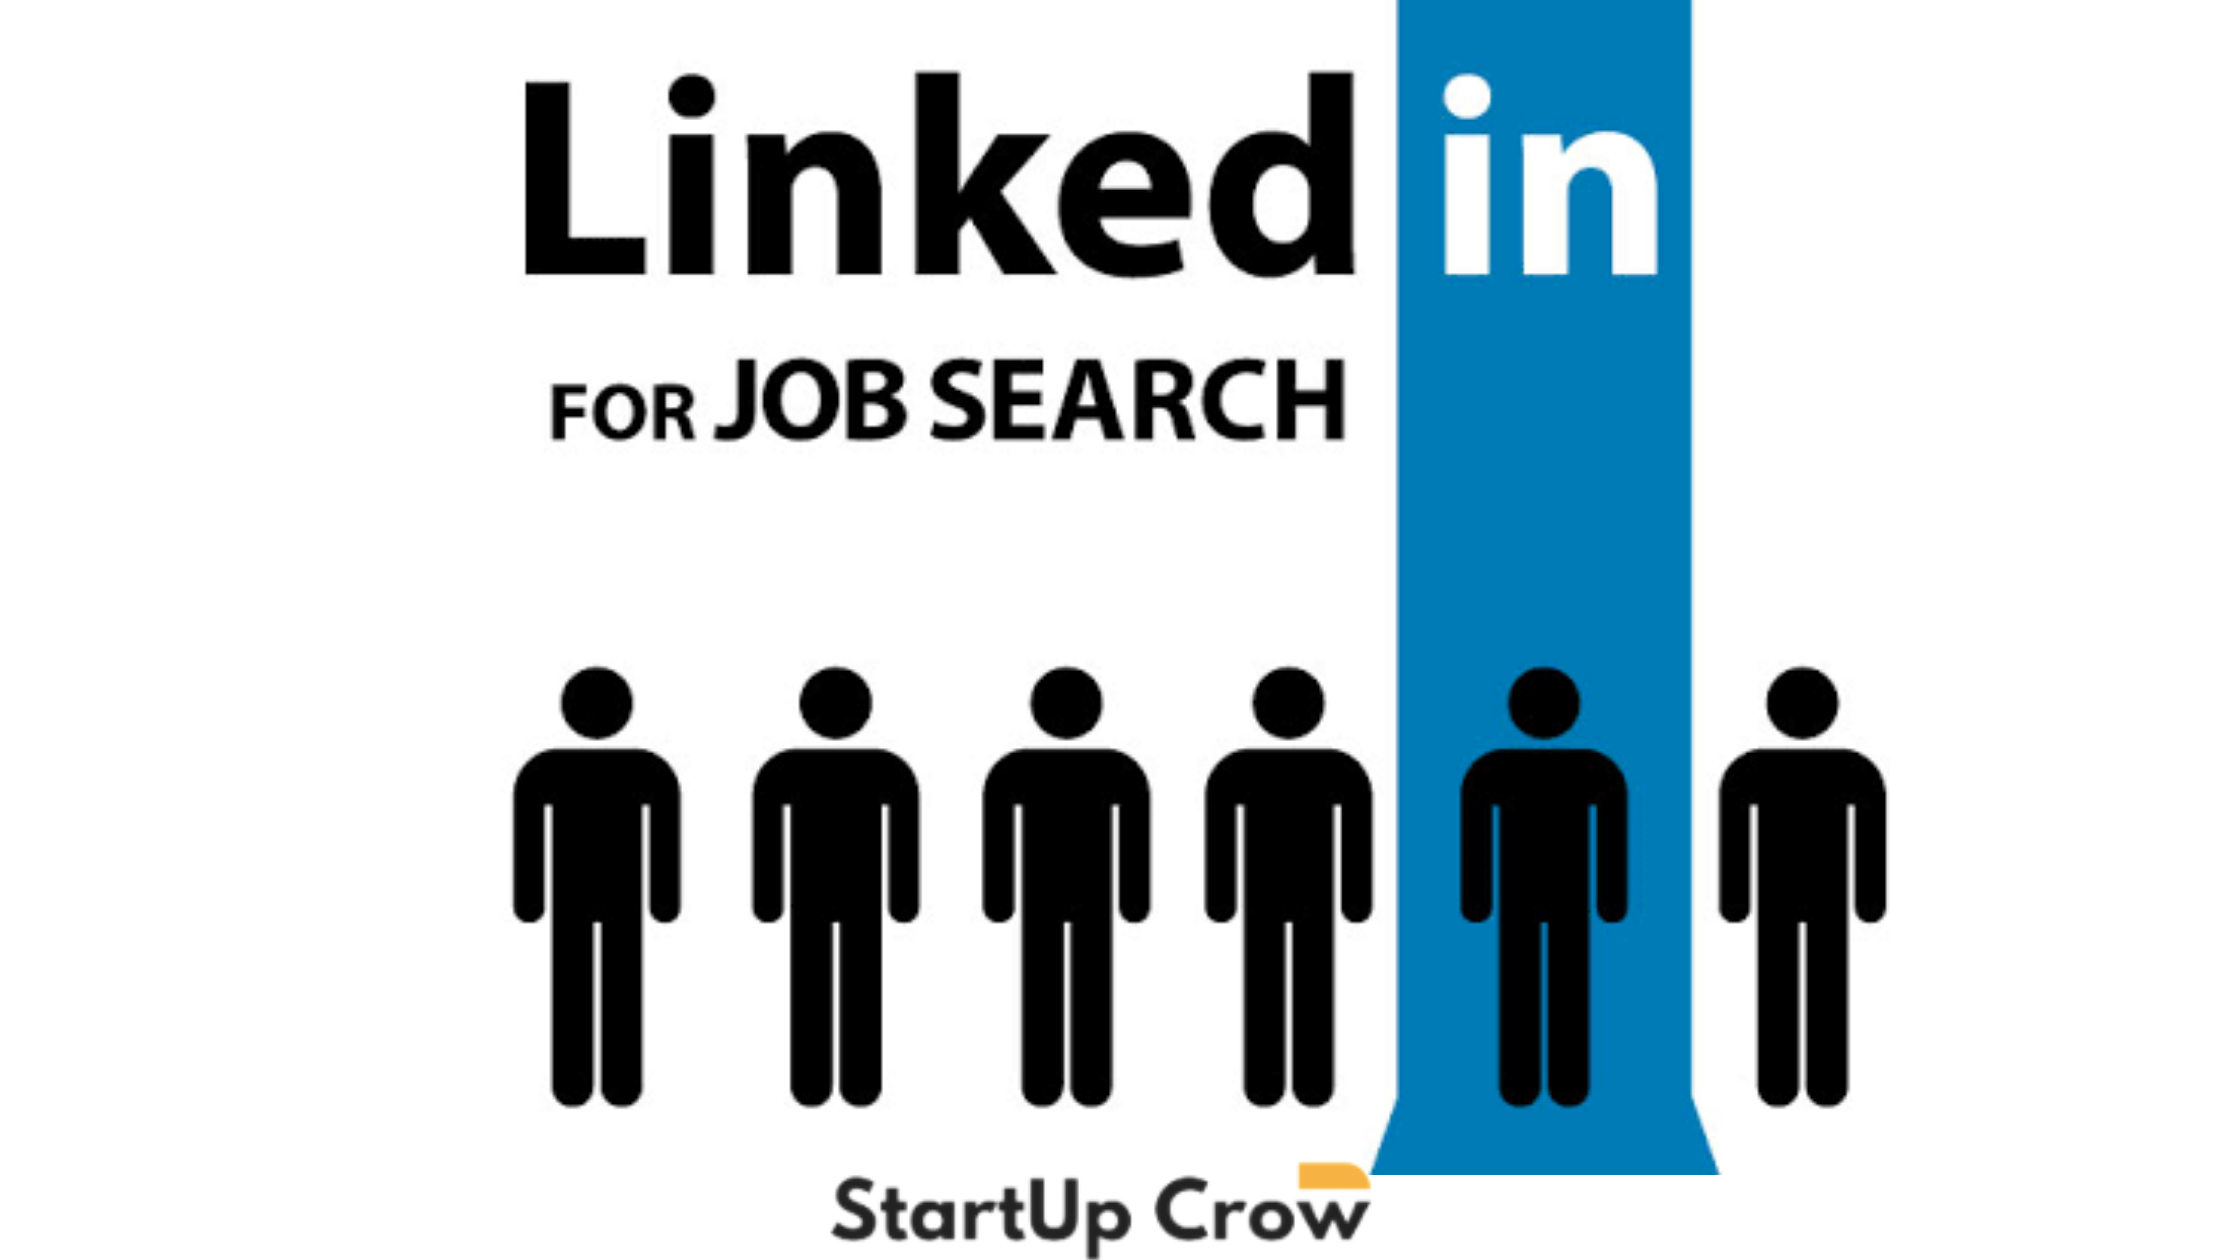 Use LinkedIn to find job